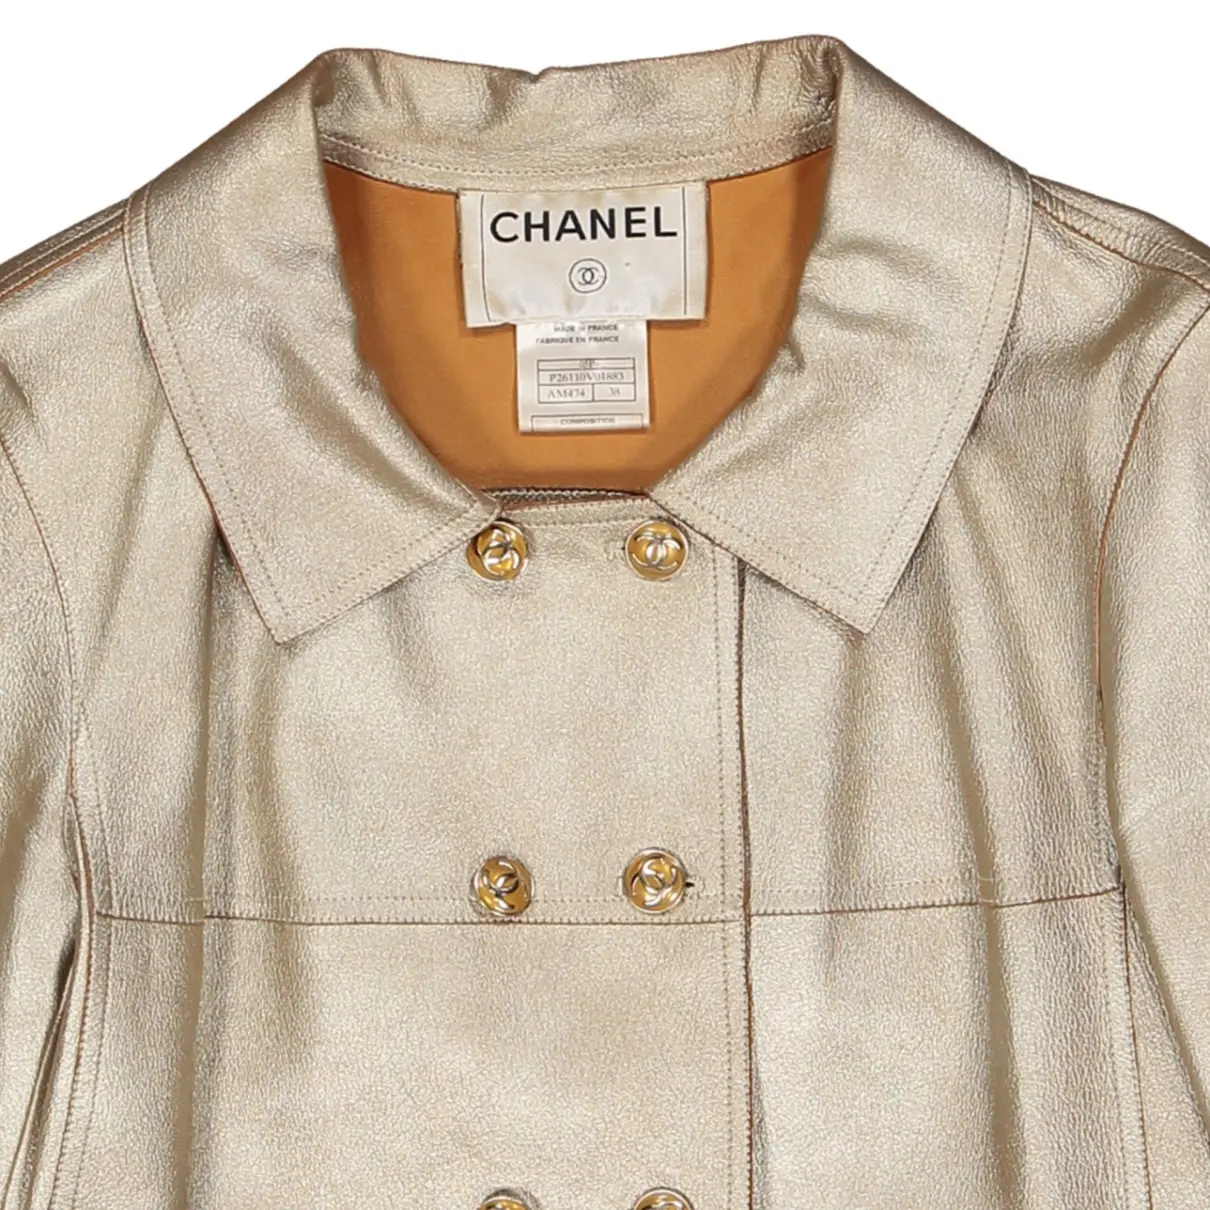 Buy Chanel Leather jacket online